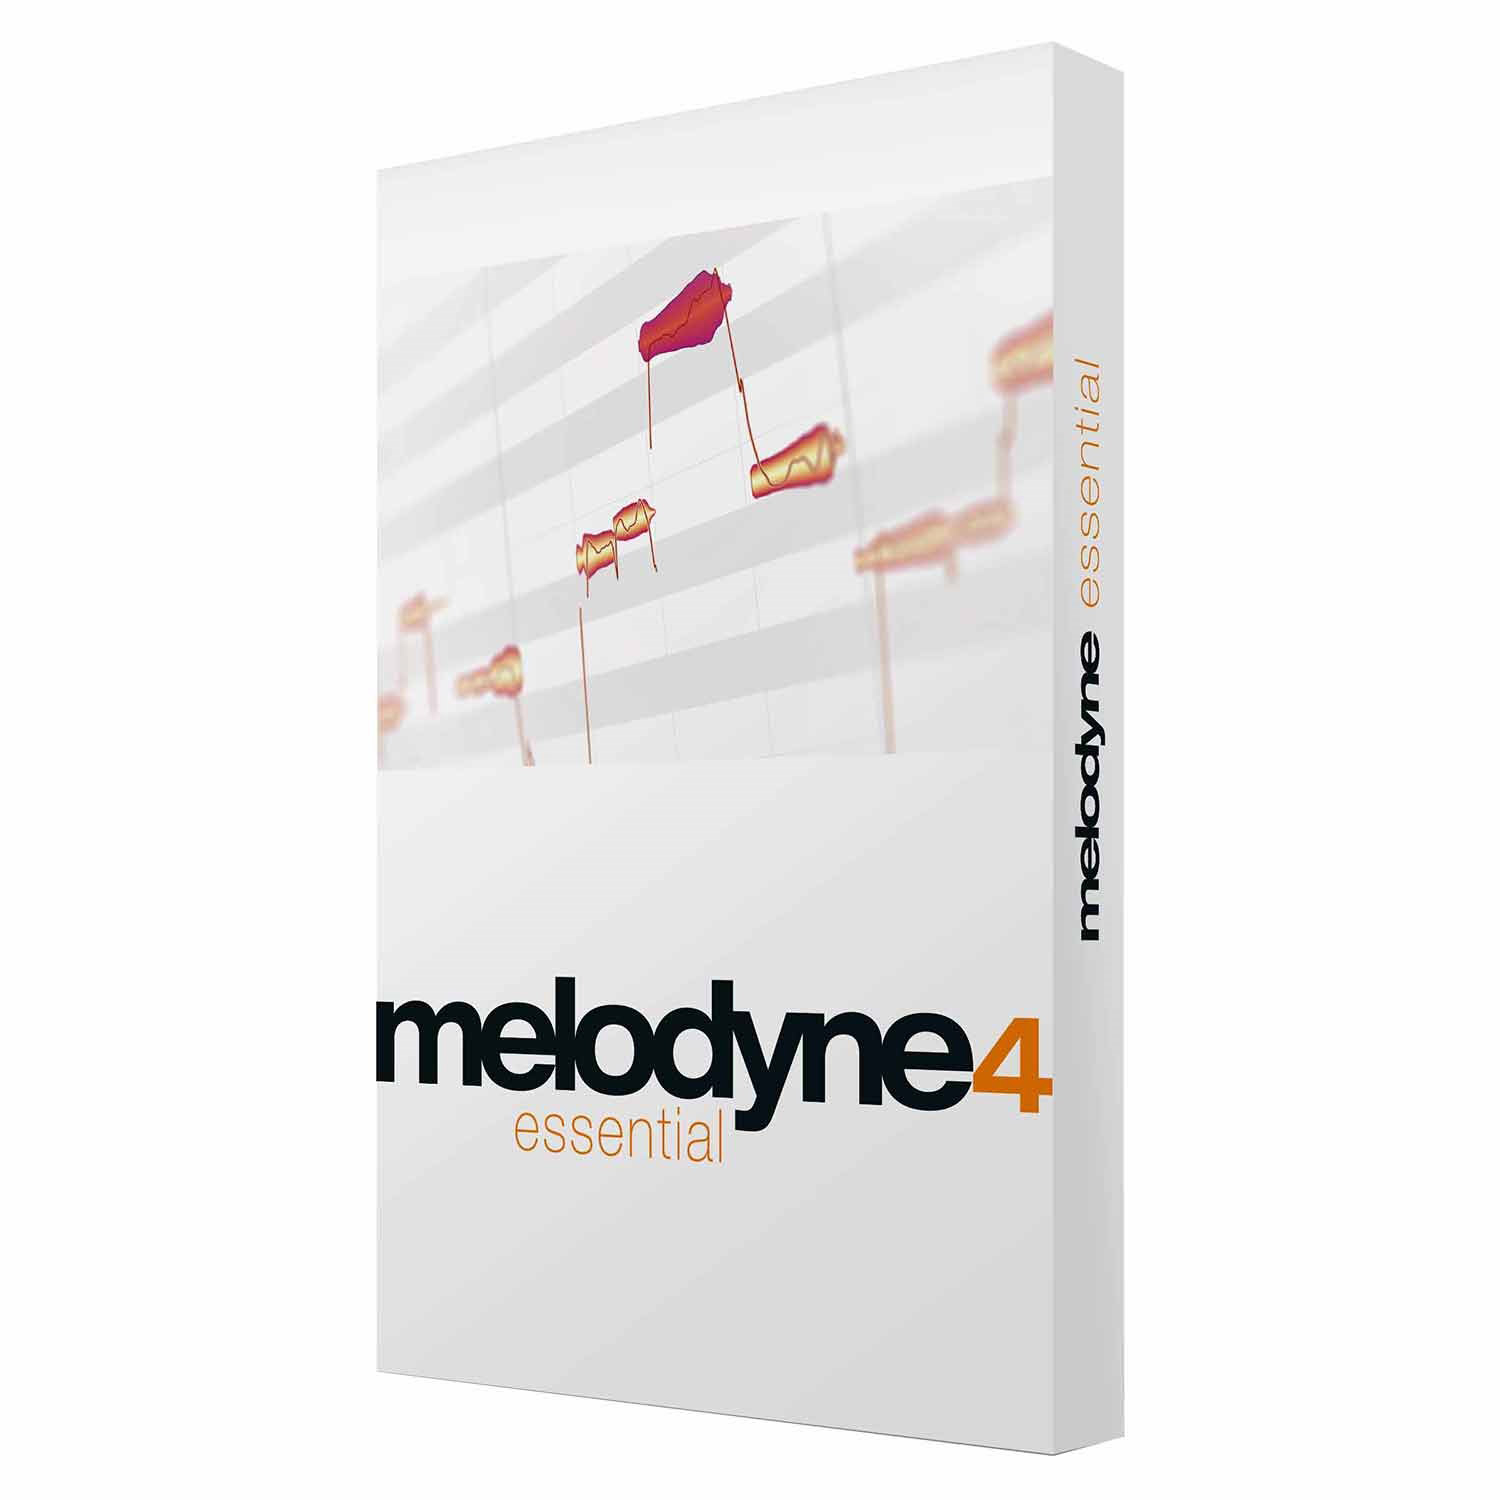 melodyne serial number free